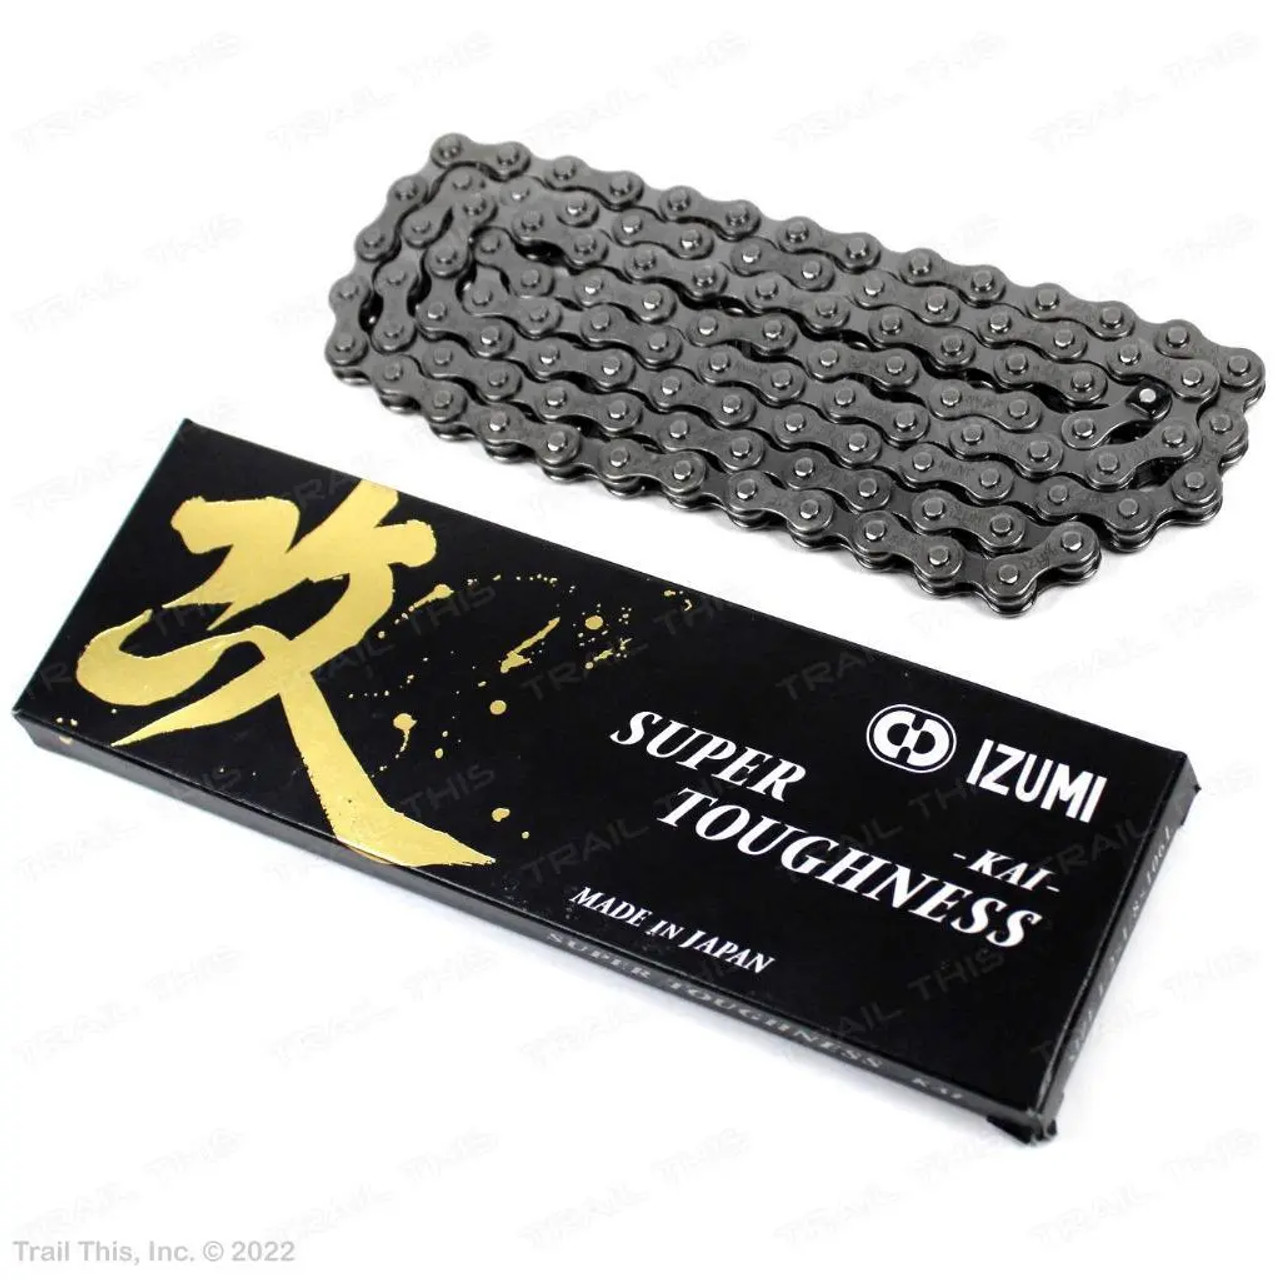 Izumi Super Toughness KAI 1/8 106Link Chain In Grey RRP £99.99